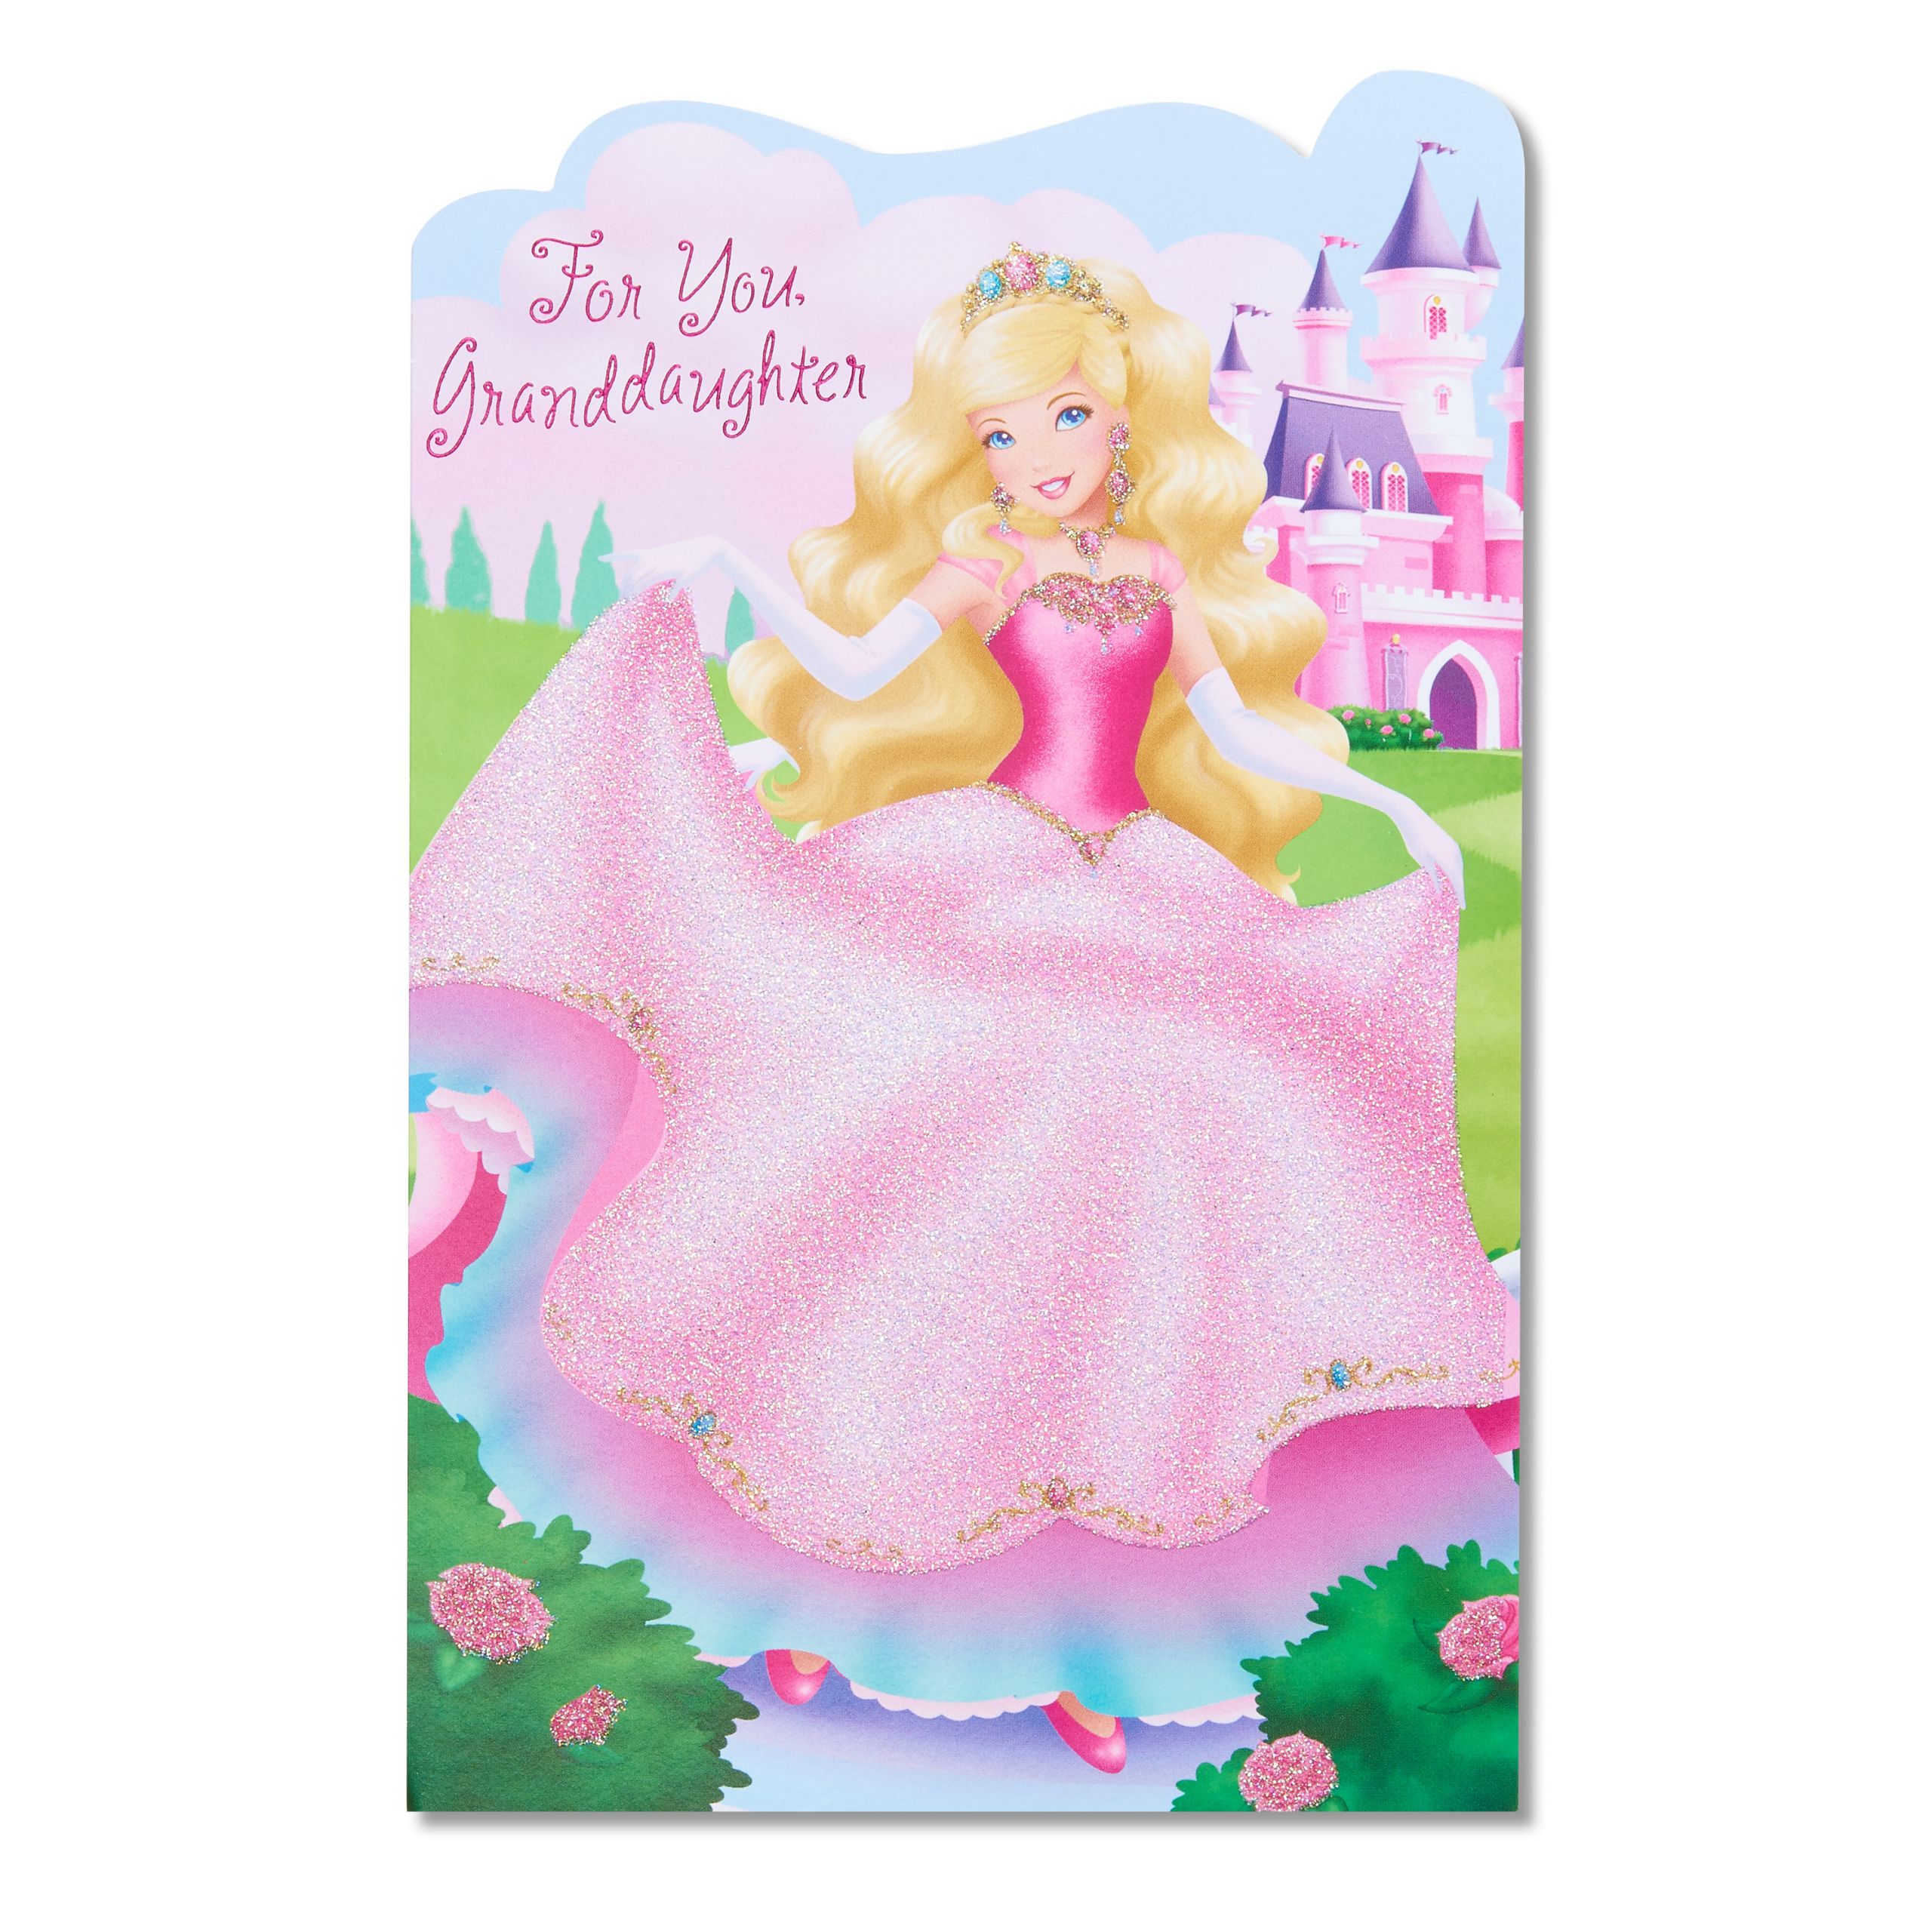 Princess Birthday Cards
 American Greetings Princess Birthday Card for